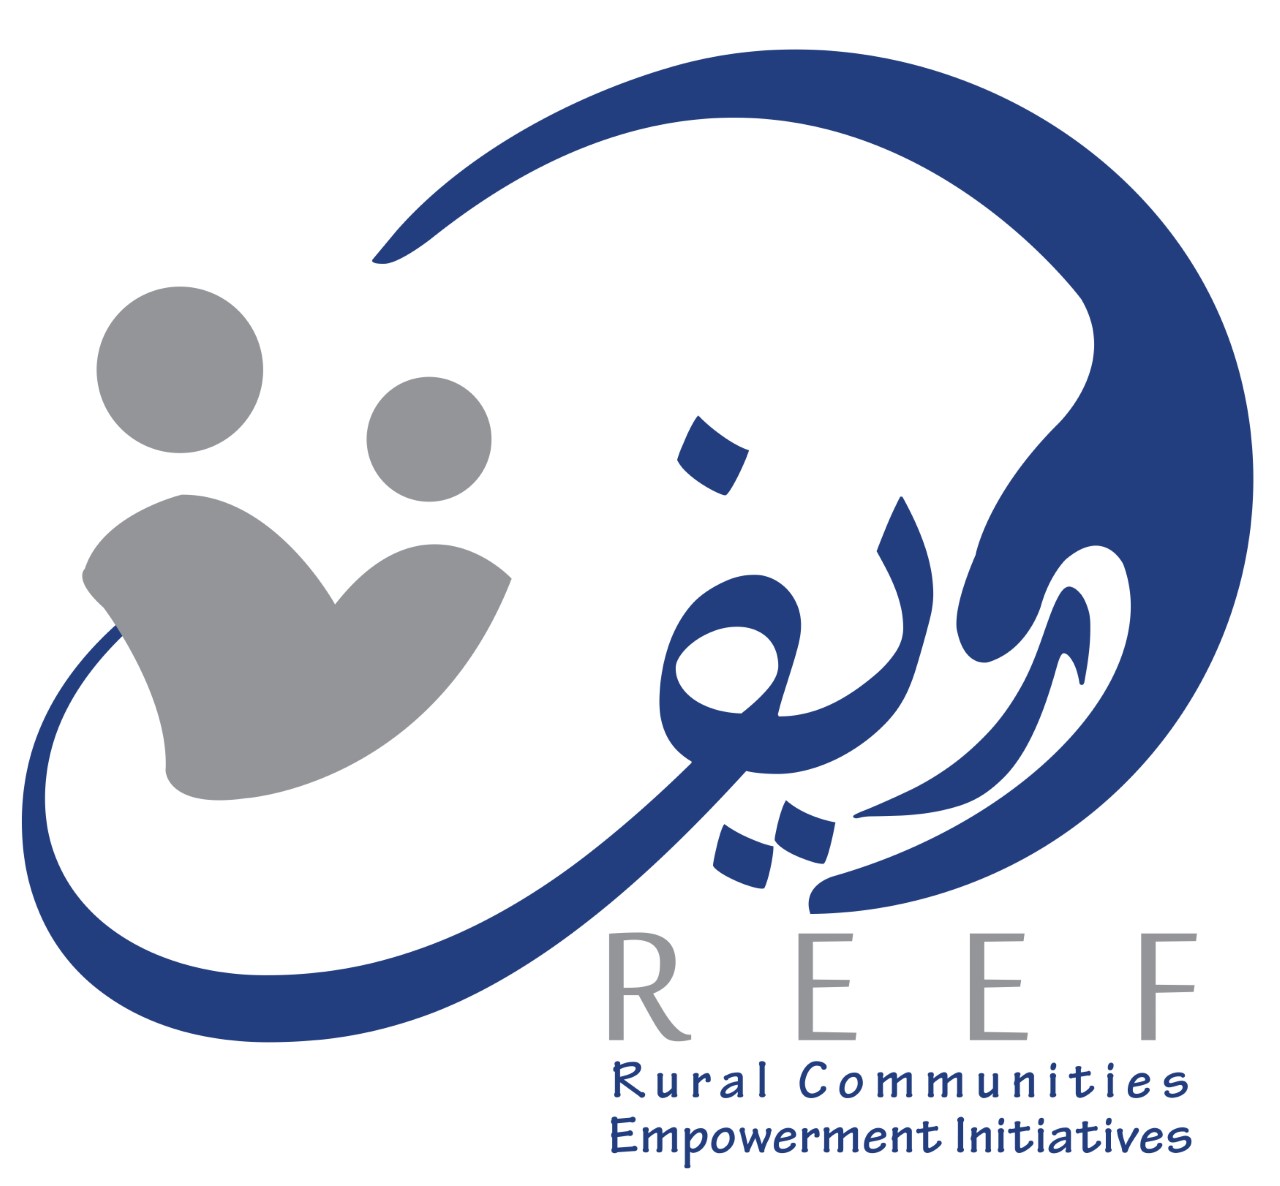 Rural Communities Empowerment Initiatives by MUBS